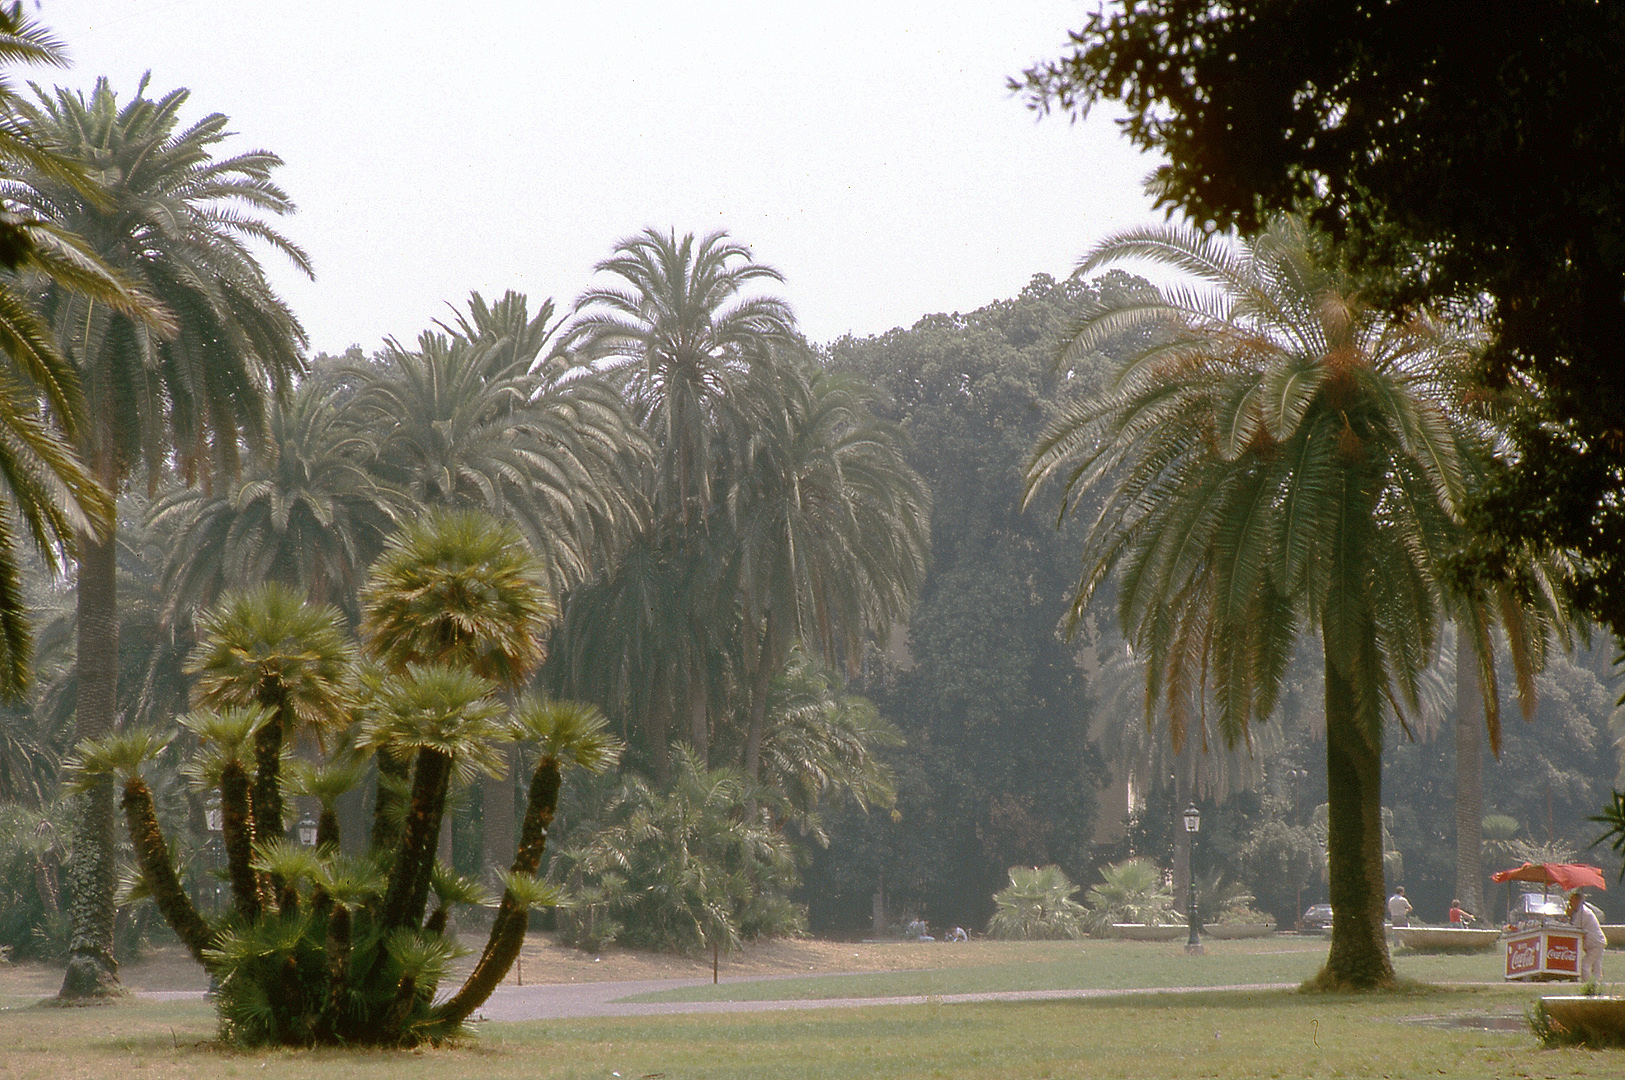 Park van Capodimonte, Napels (Campani), Capodimonte Park, Naples (Campania, Italy)